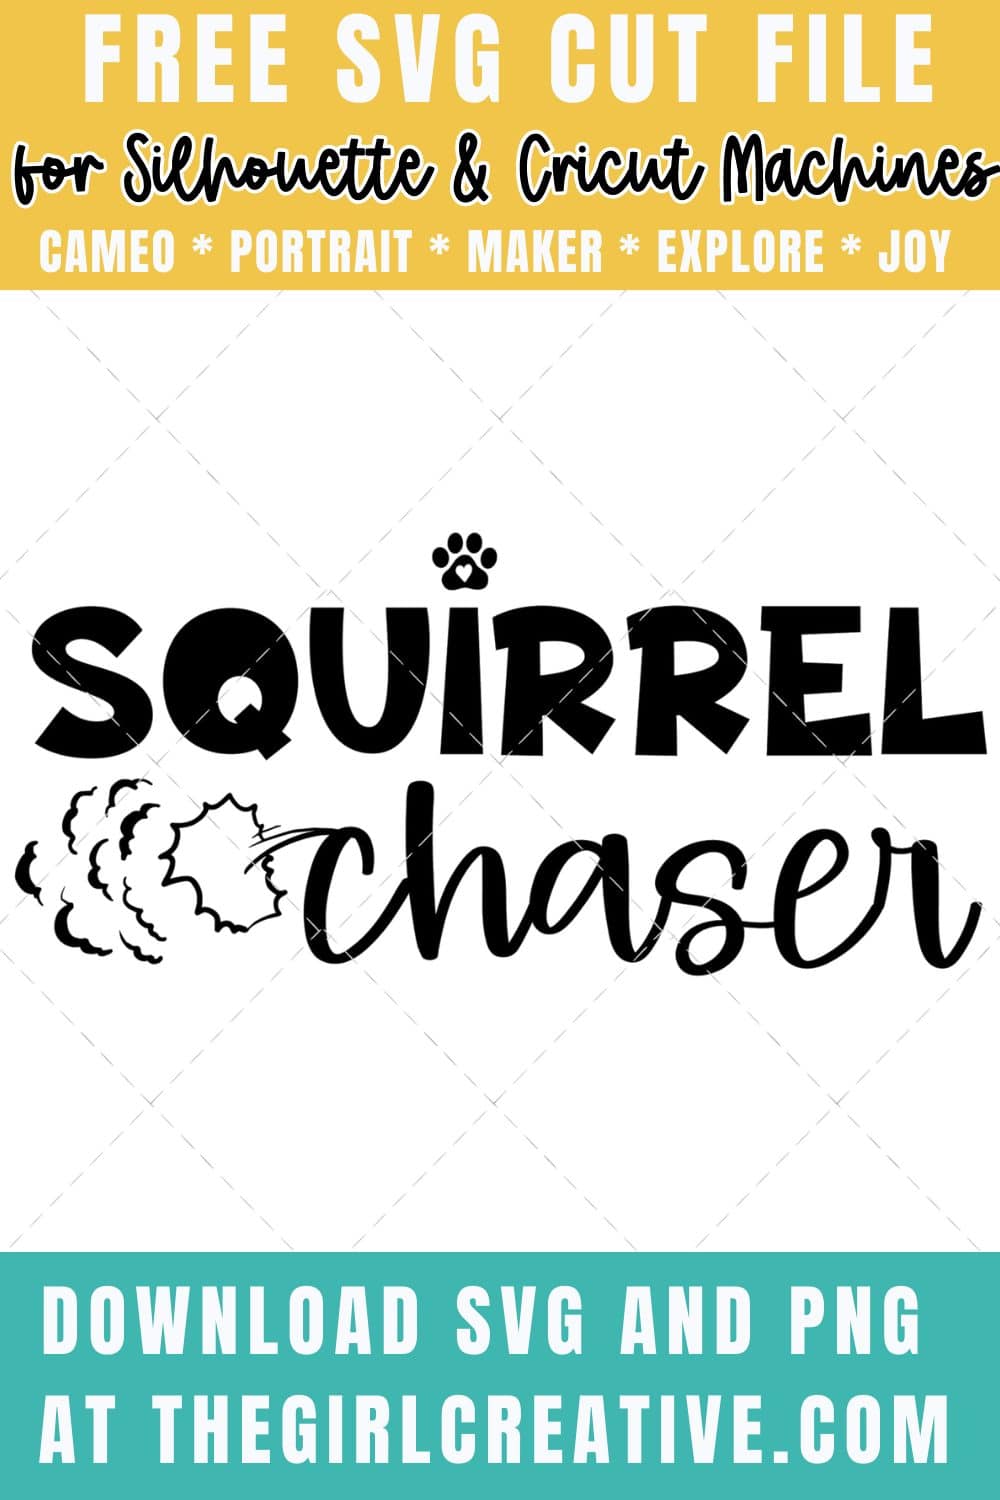 Squirrel Chaser SVG file